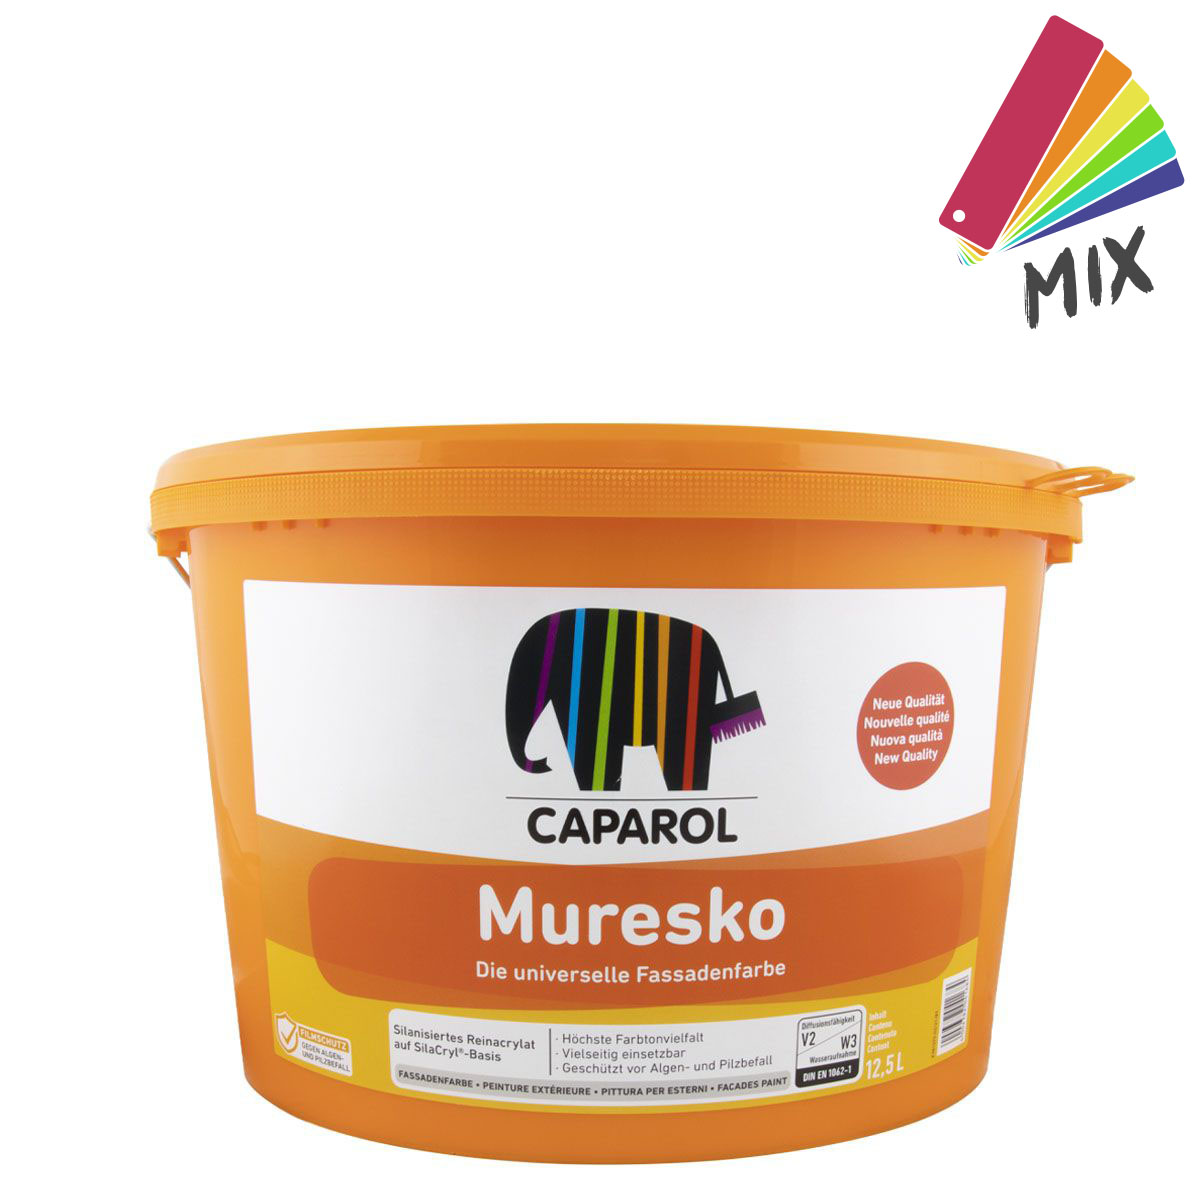 Caparol Muresko SilaCryl Fassadenfarbe 12,5L wunschfarbton PG B, Reinacrylat-Fassadenfarbe